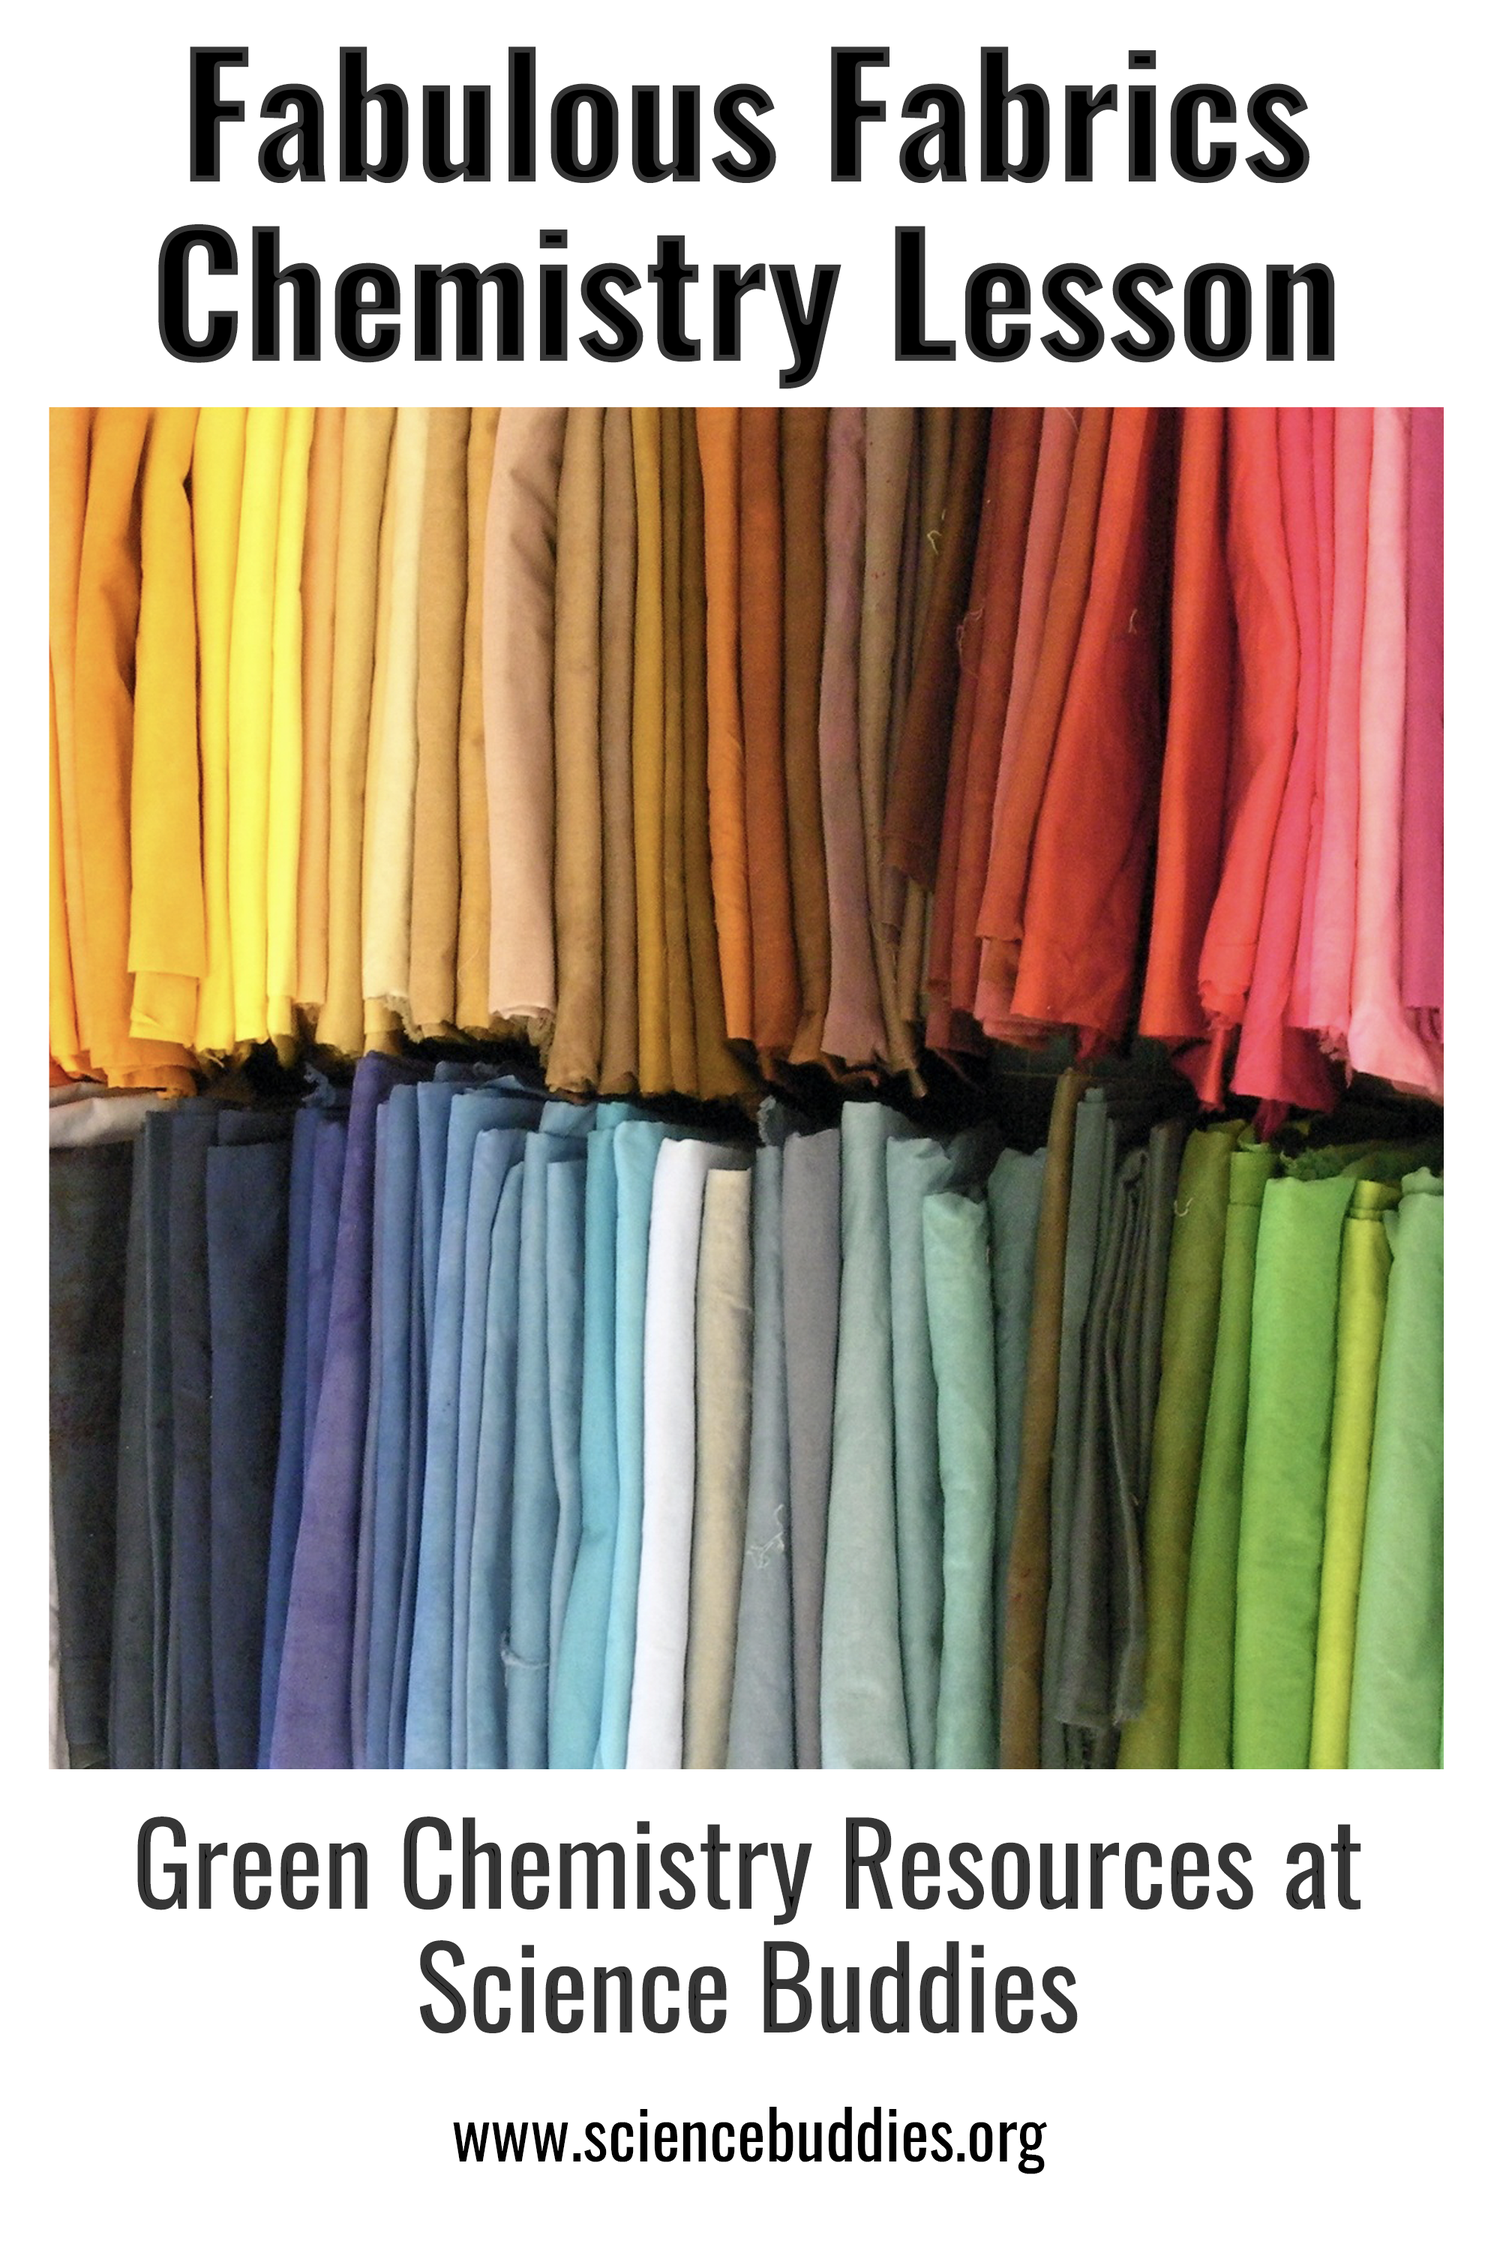 Colorful fabrics for green chemistry Fabulous Fabrics lesson on dyeing fabrics